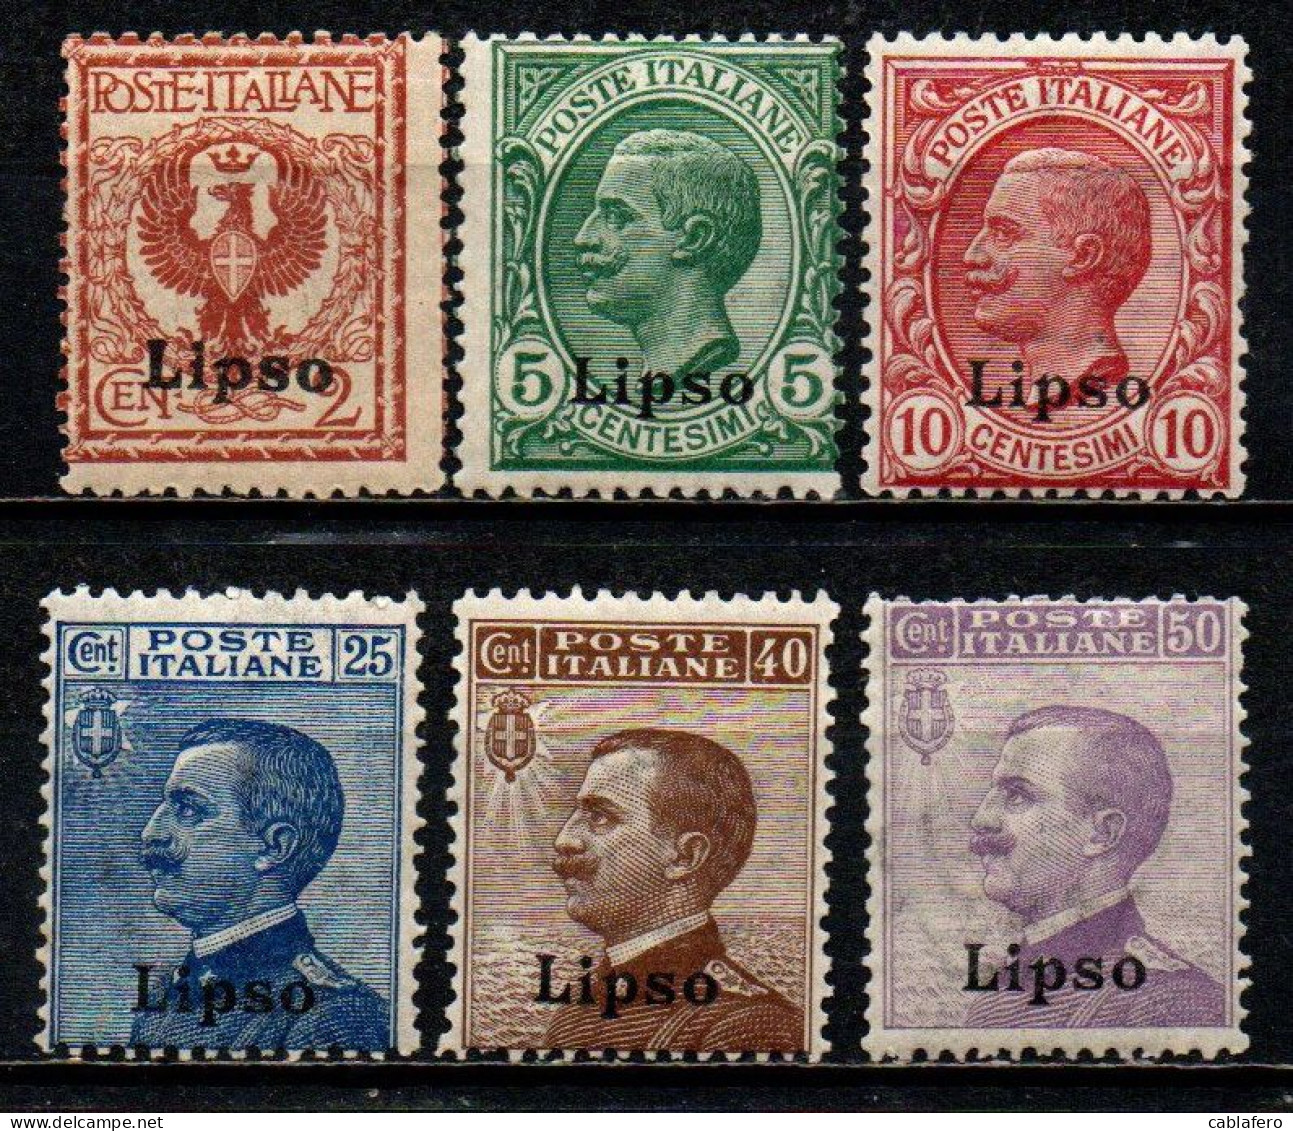 COLONIE ITALIANE - LIPSO - 1912 - EFFIGIE DEL RE VITTORIO EMANUELE III - MNH - Egée (Lipso)